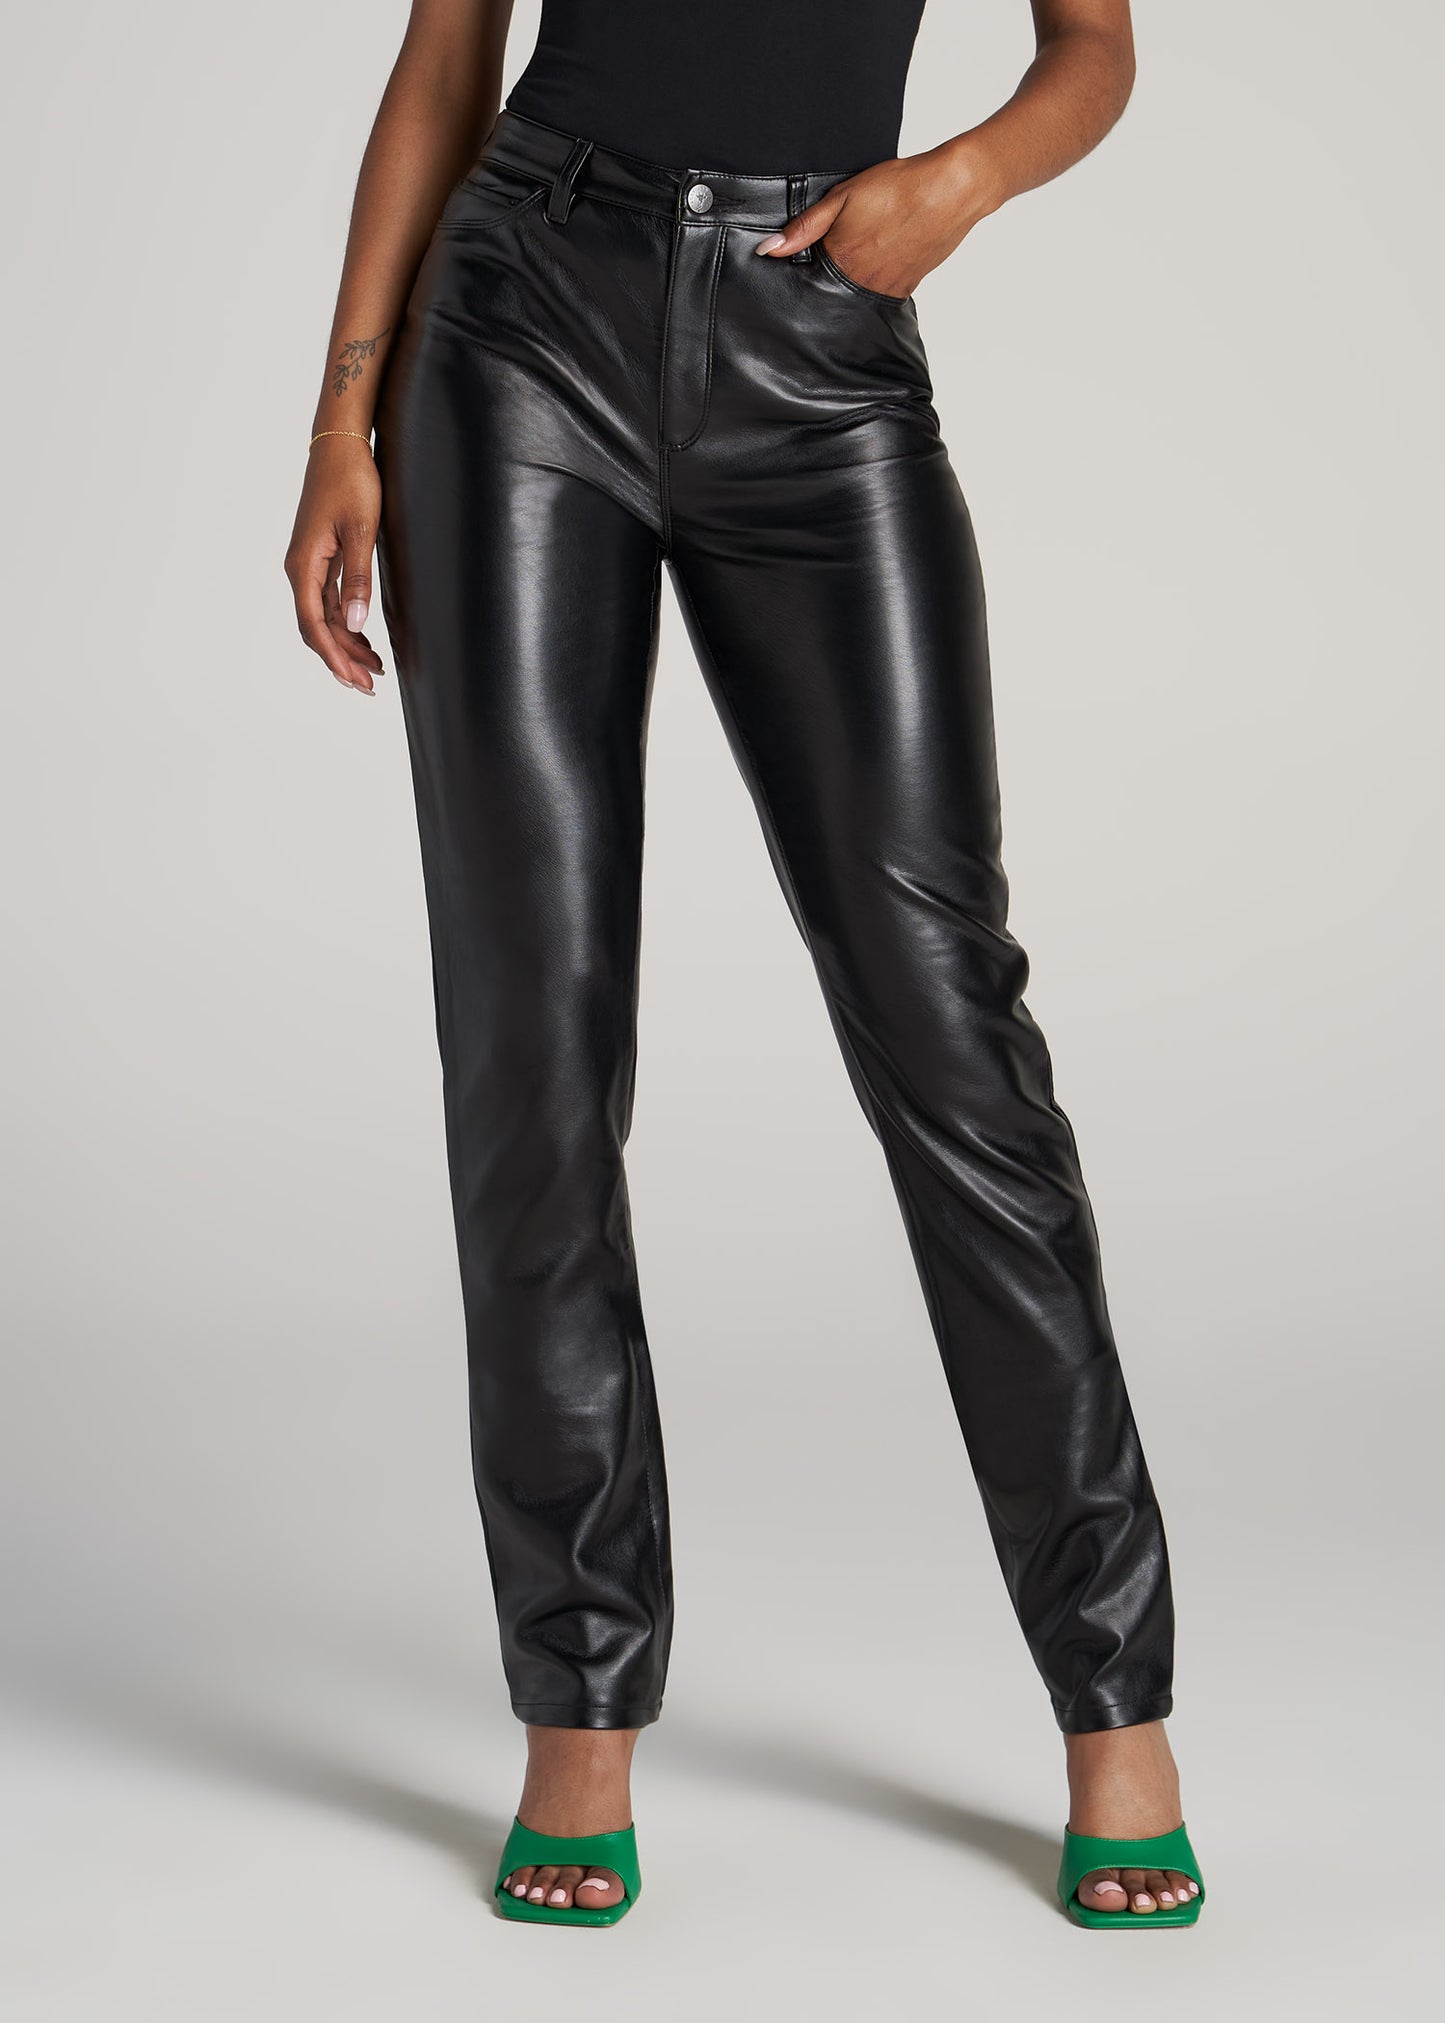 Kiapeise Women's Sexy Pu Leather Pants High Waist Artificial Leather  Elastic Fleece Shiny Tights - Walmart.com